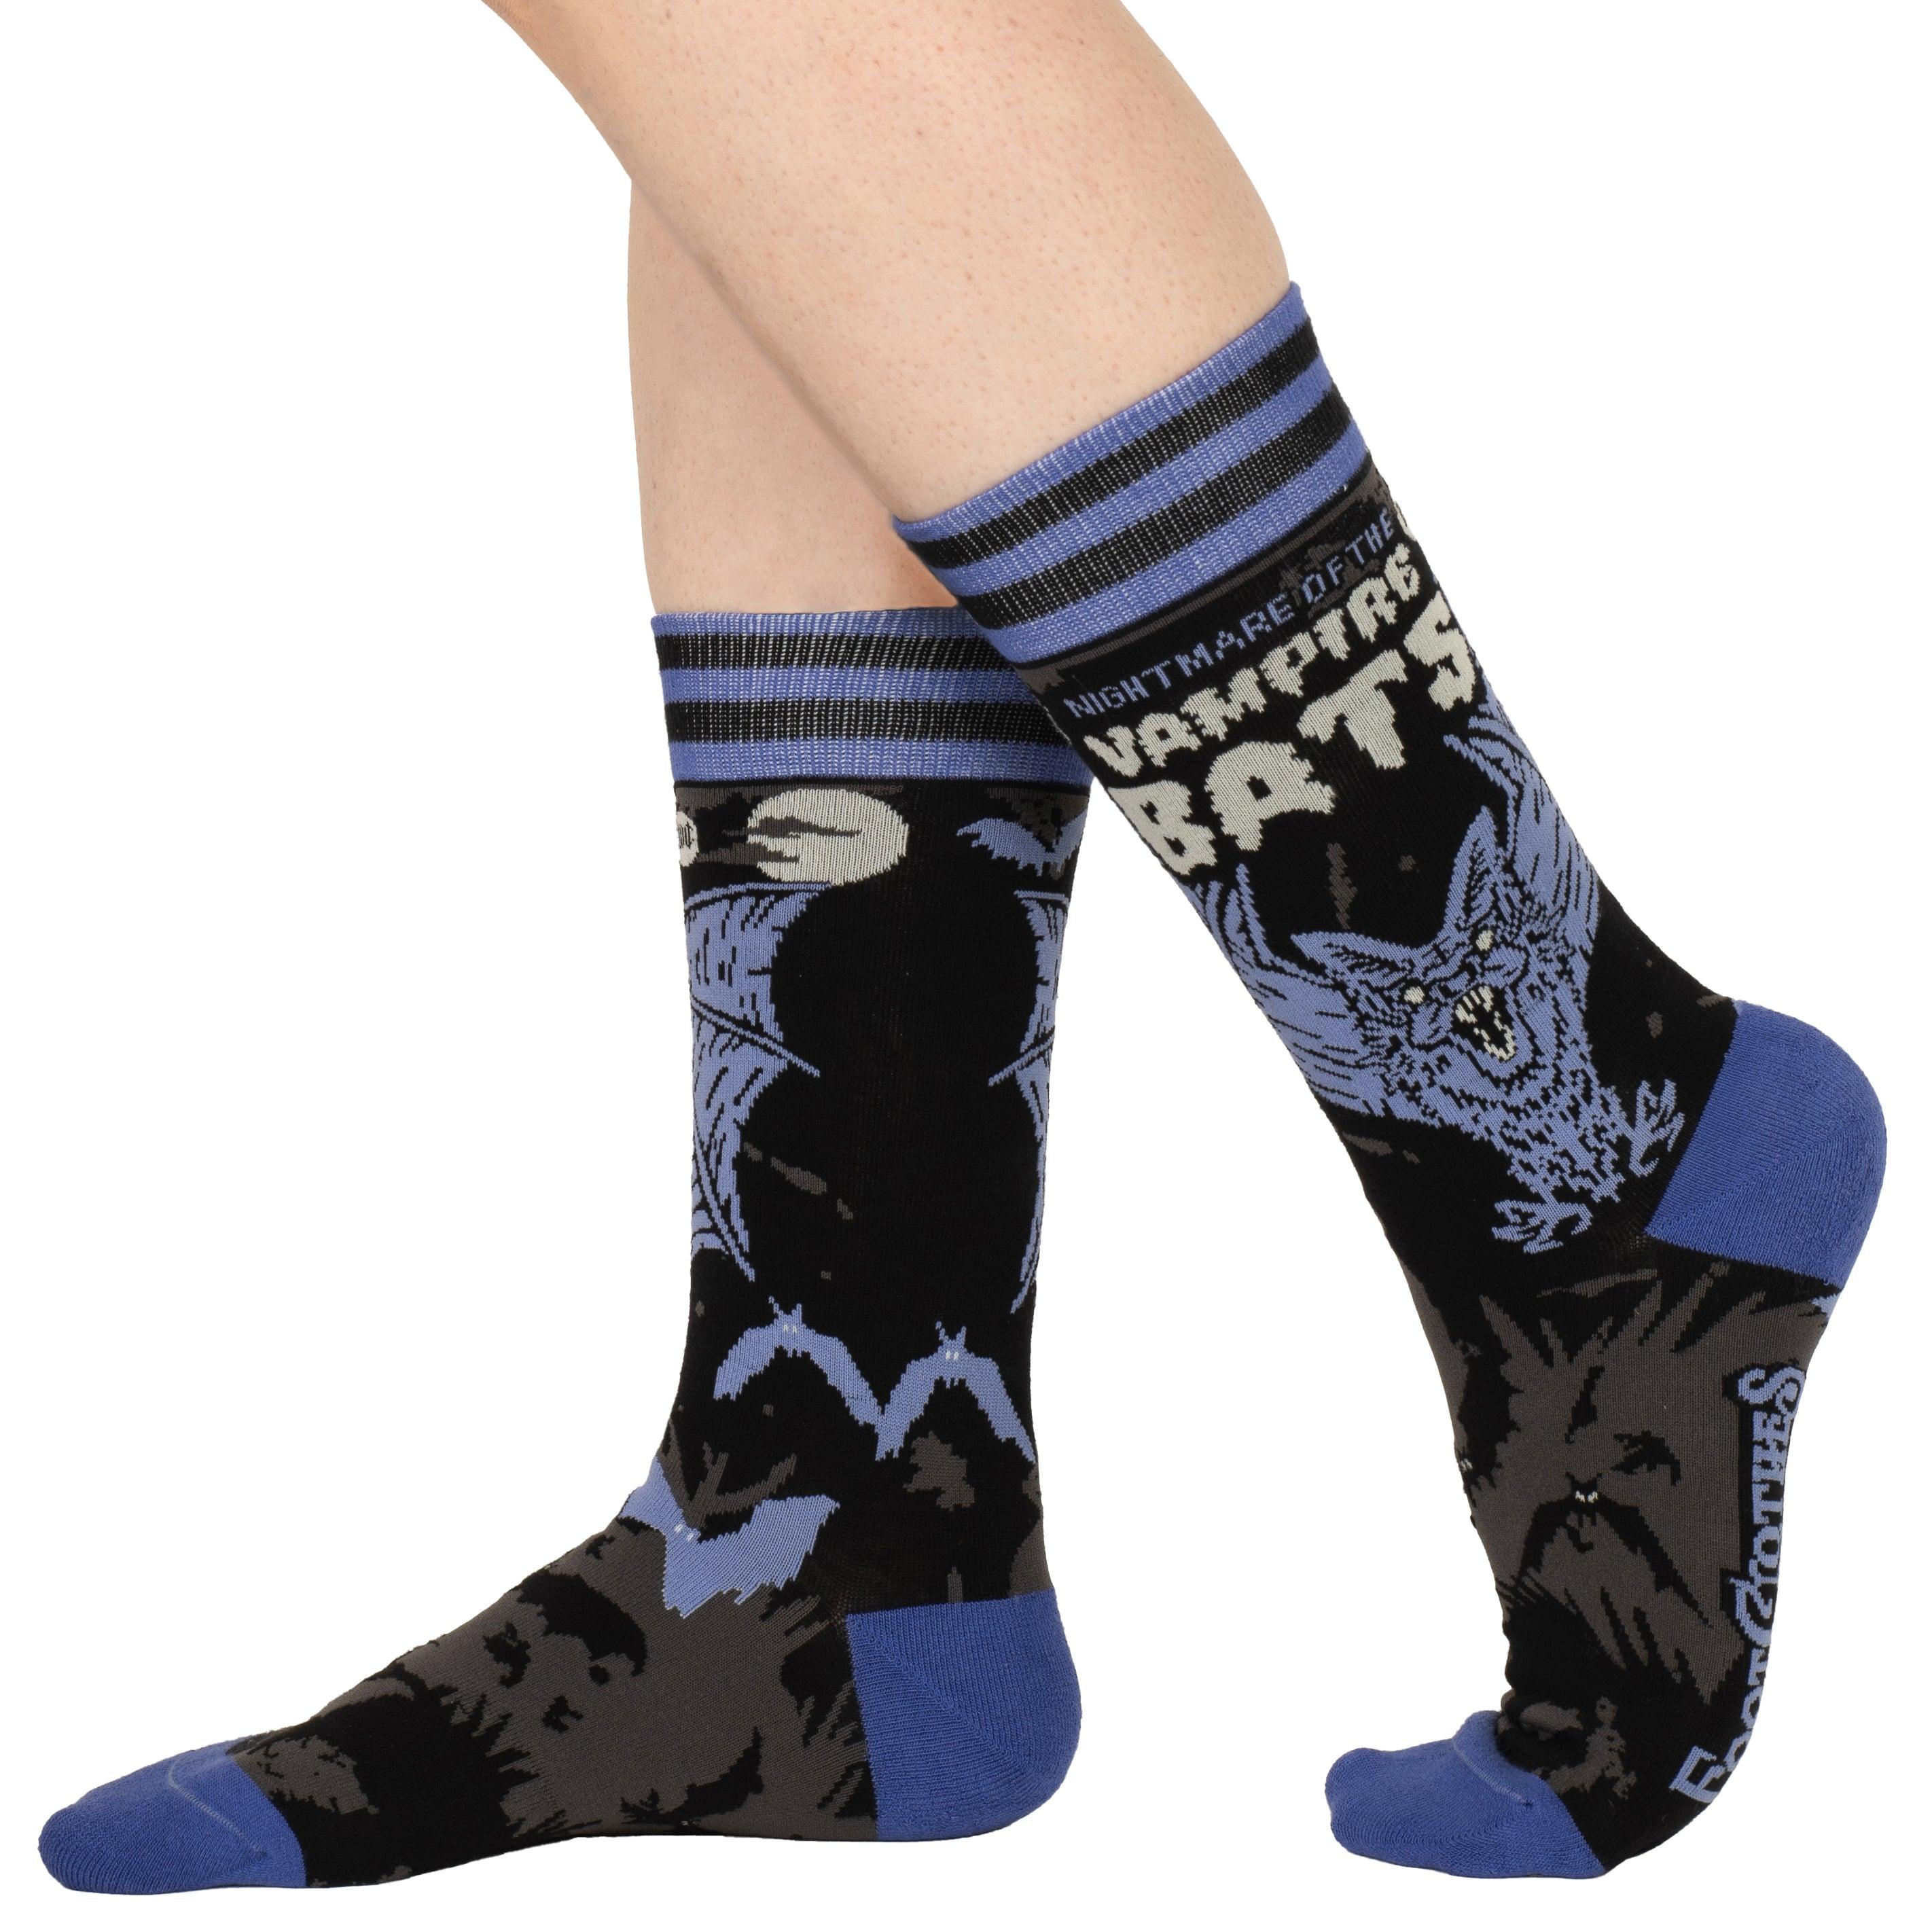 Vampire Bats Crew Socks - FootClothes